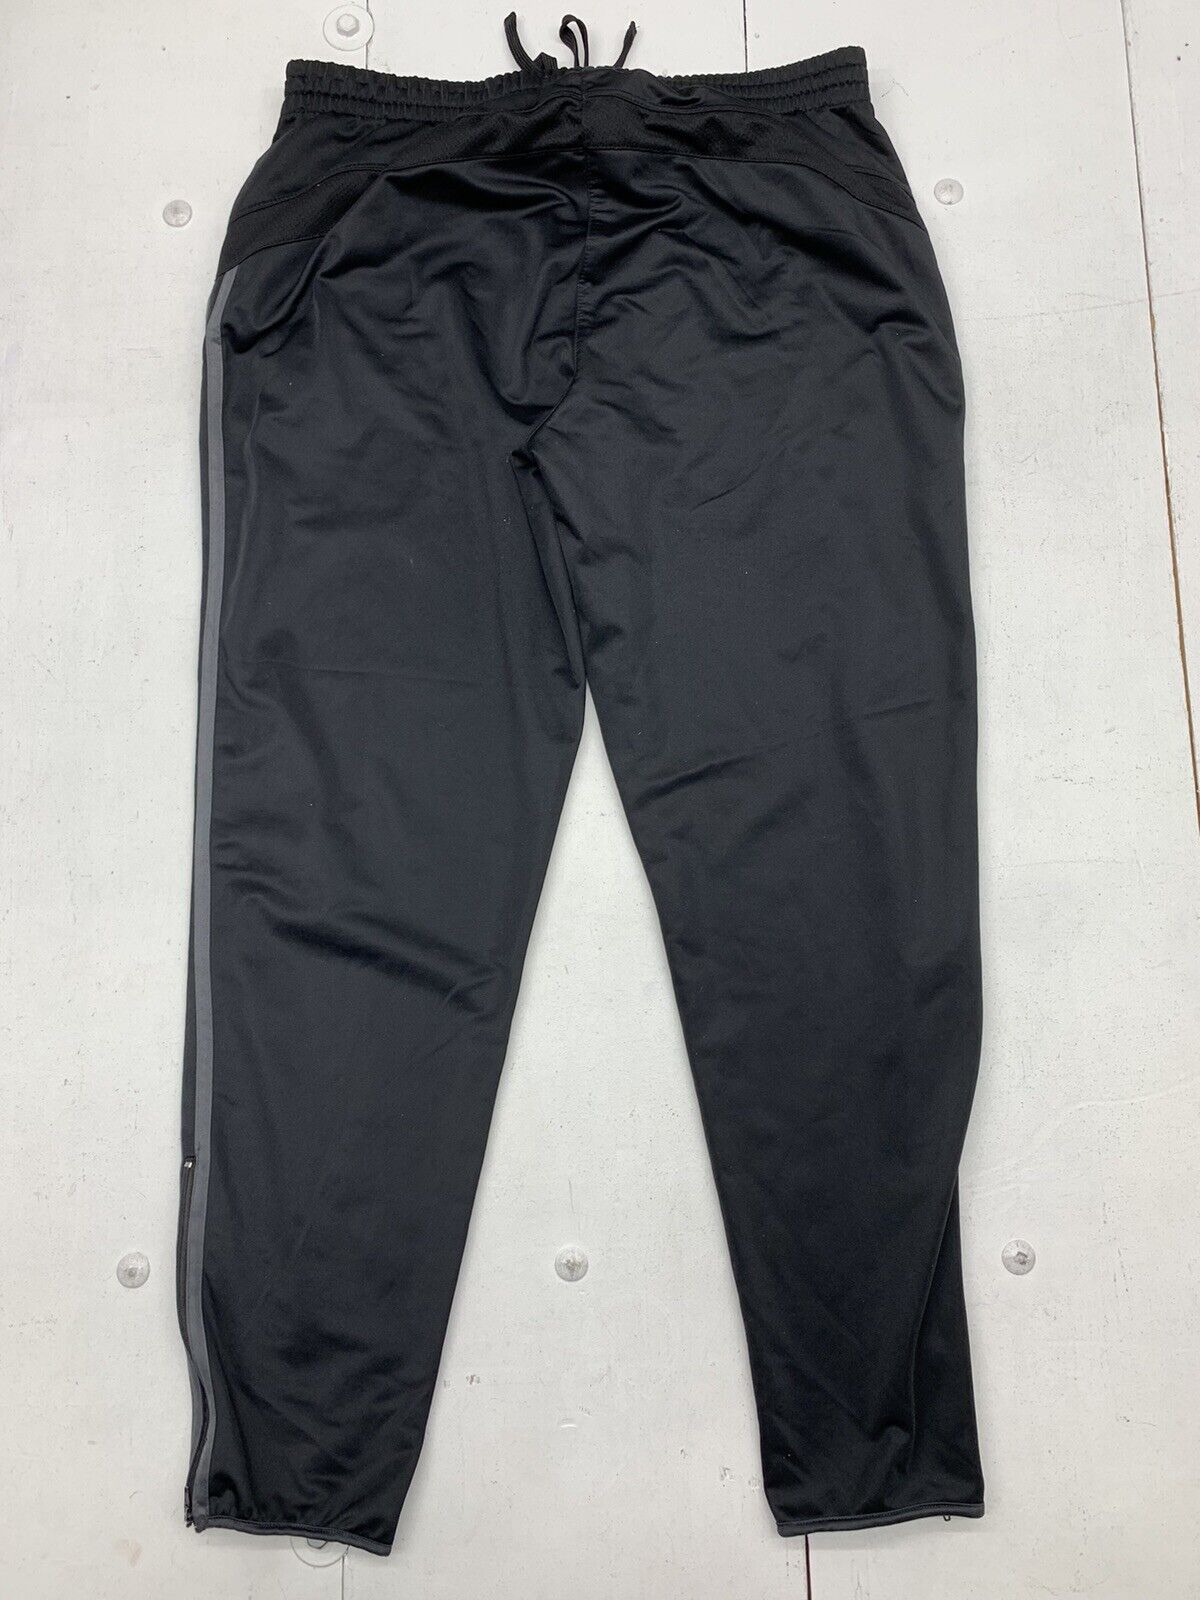 Avia Mens Black Athletic Pants Size XL - beyond exchange